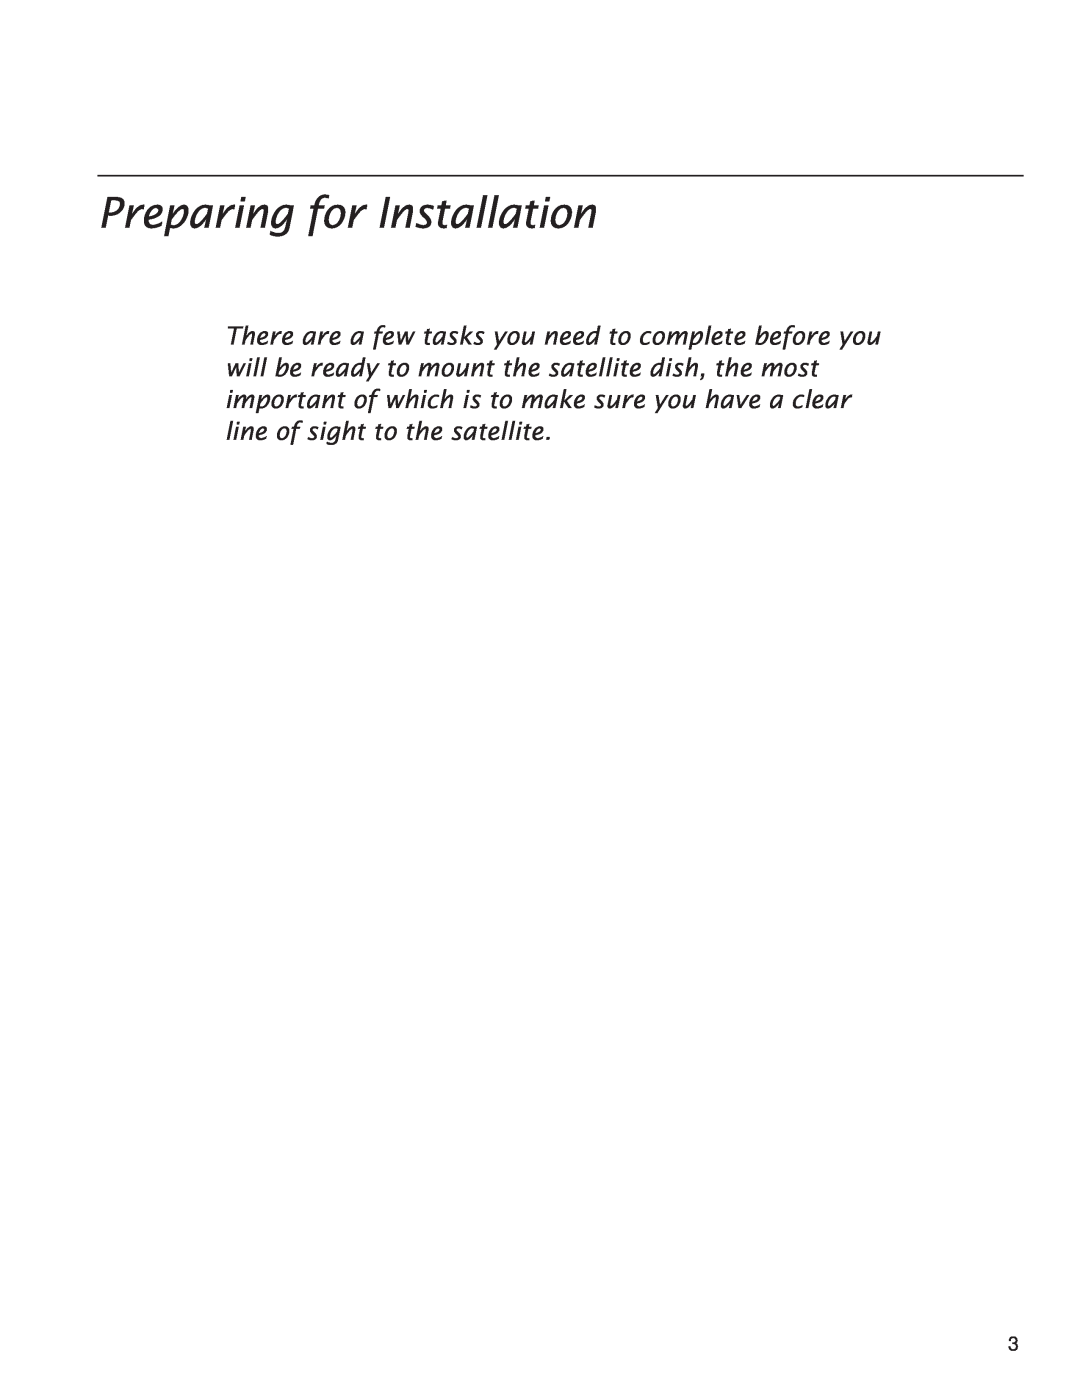 RCA Satellite TV Antenna manual Preparing for Installation 